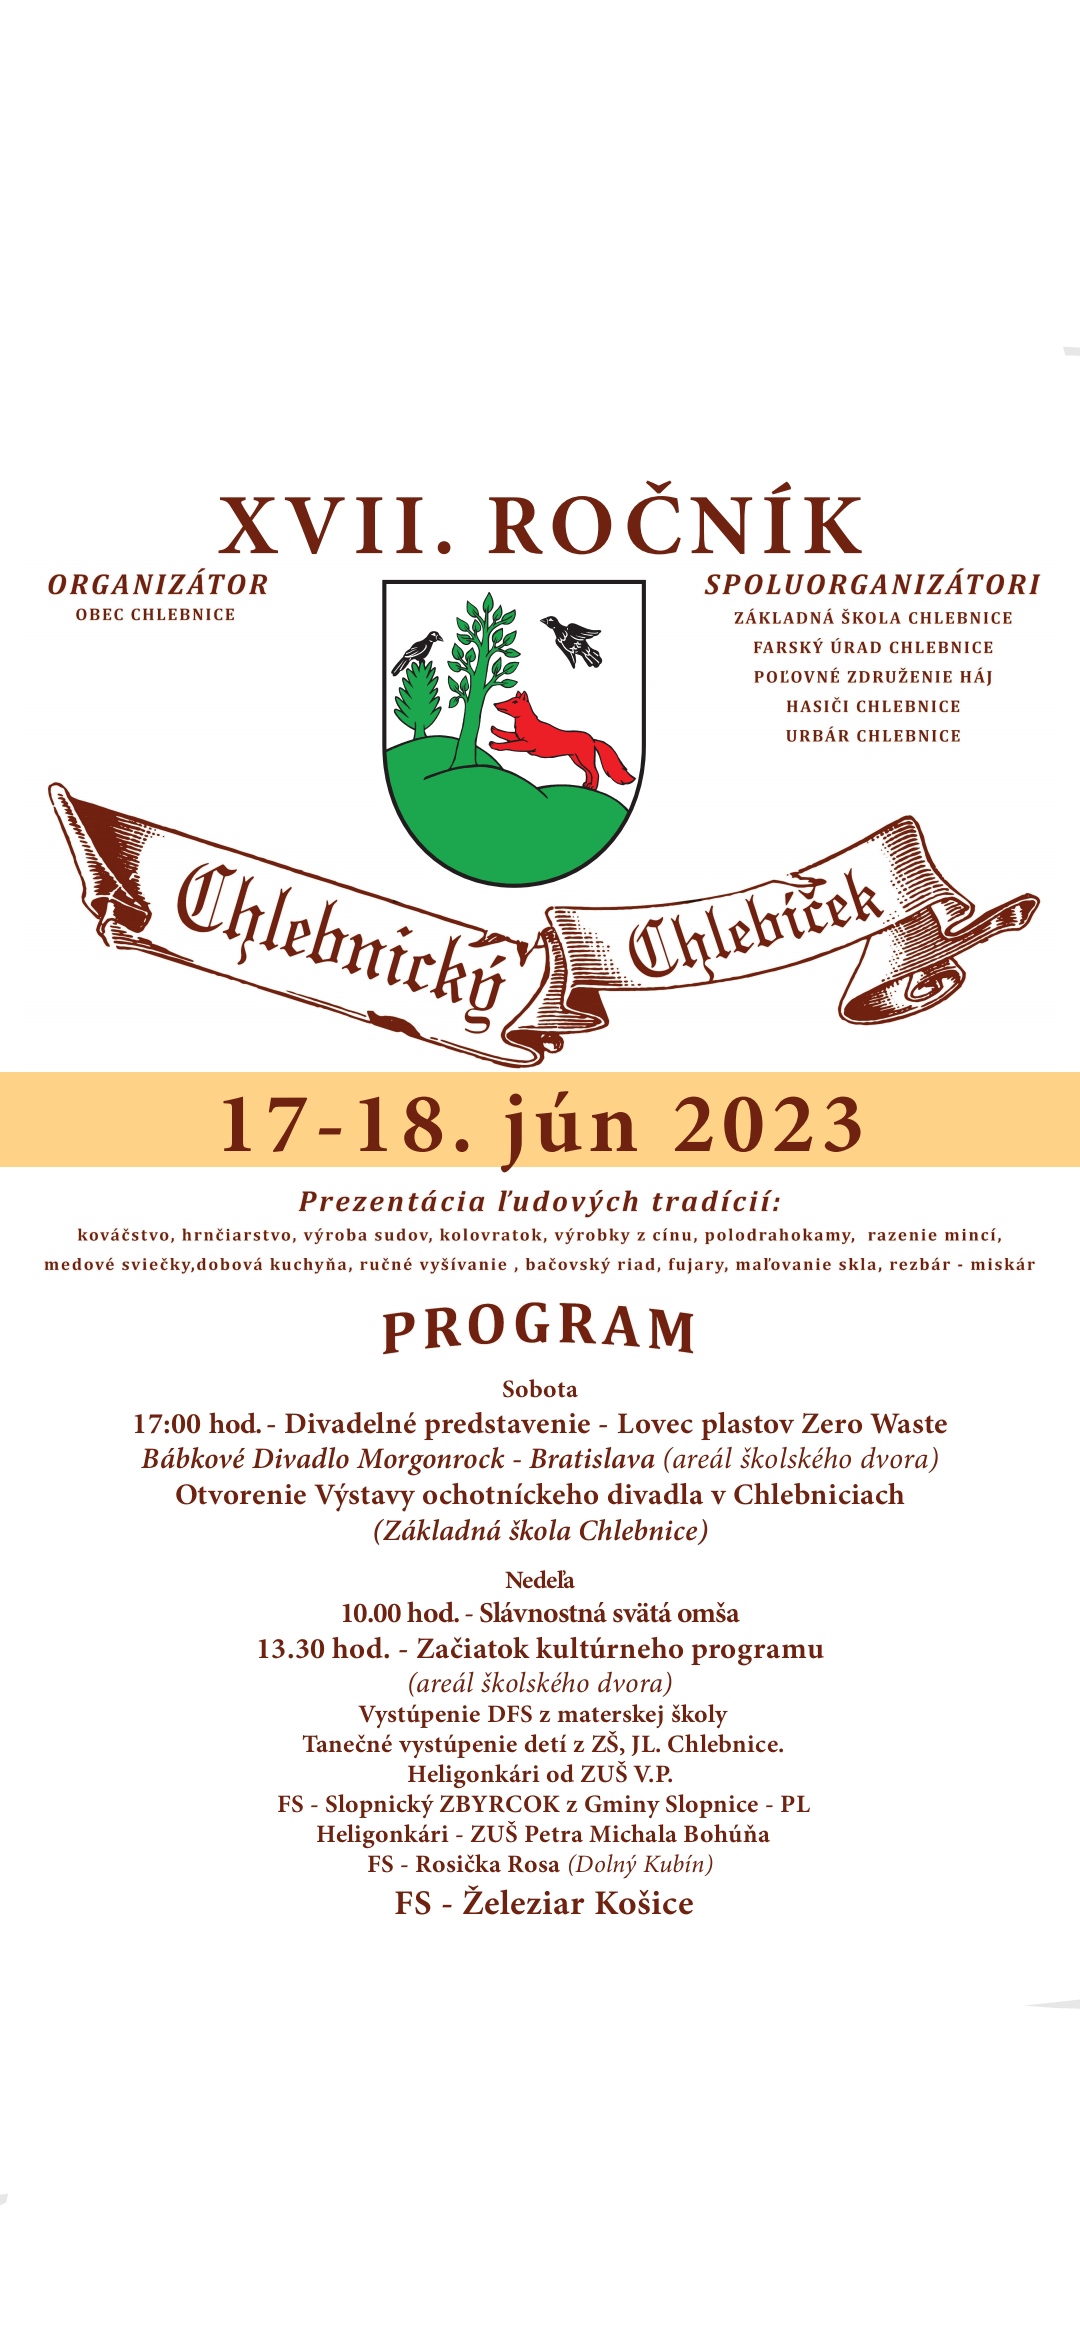 Chlebnick Chlebek 2023 Chlebnice - XV. ronk